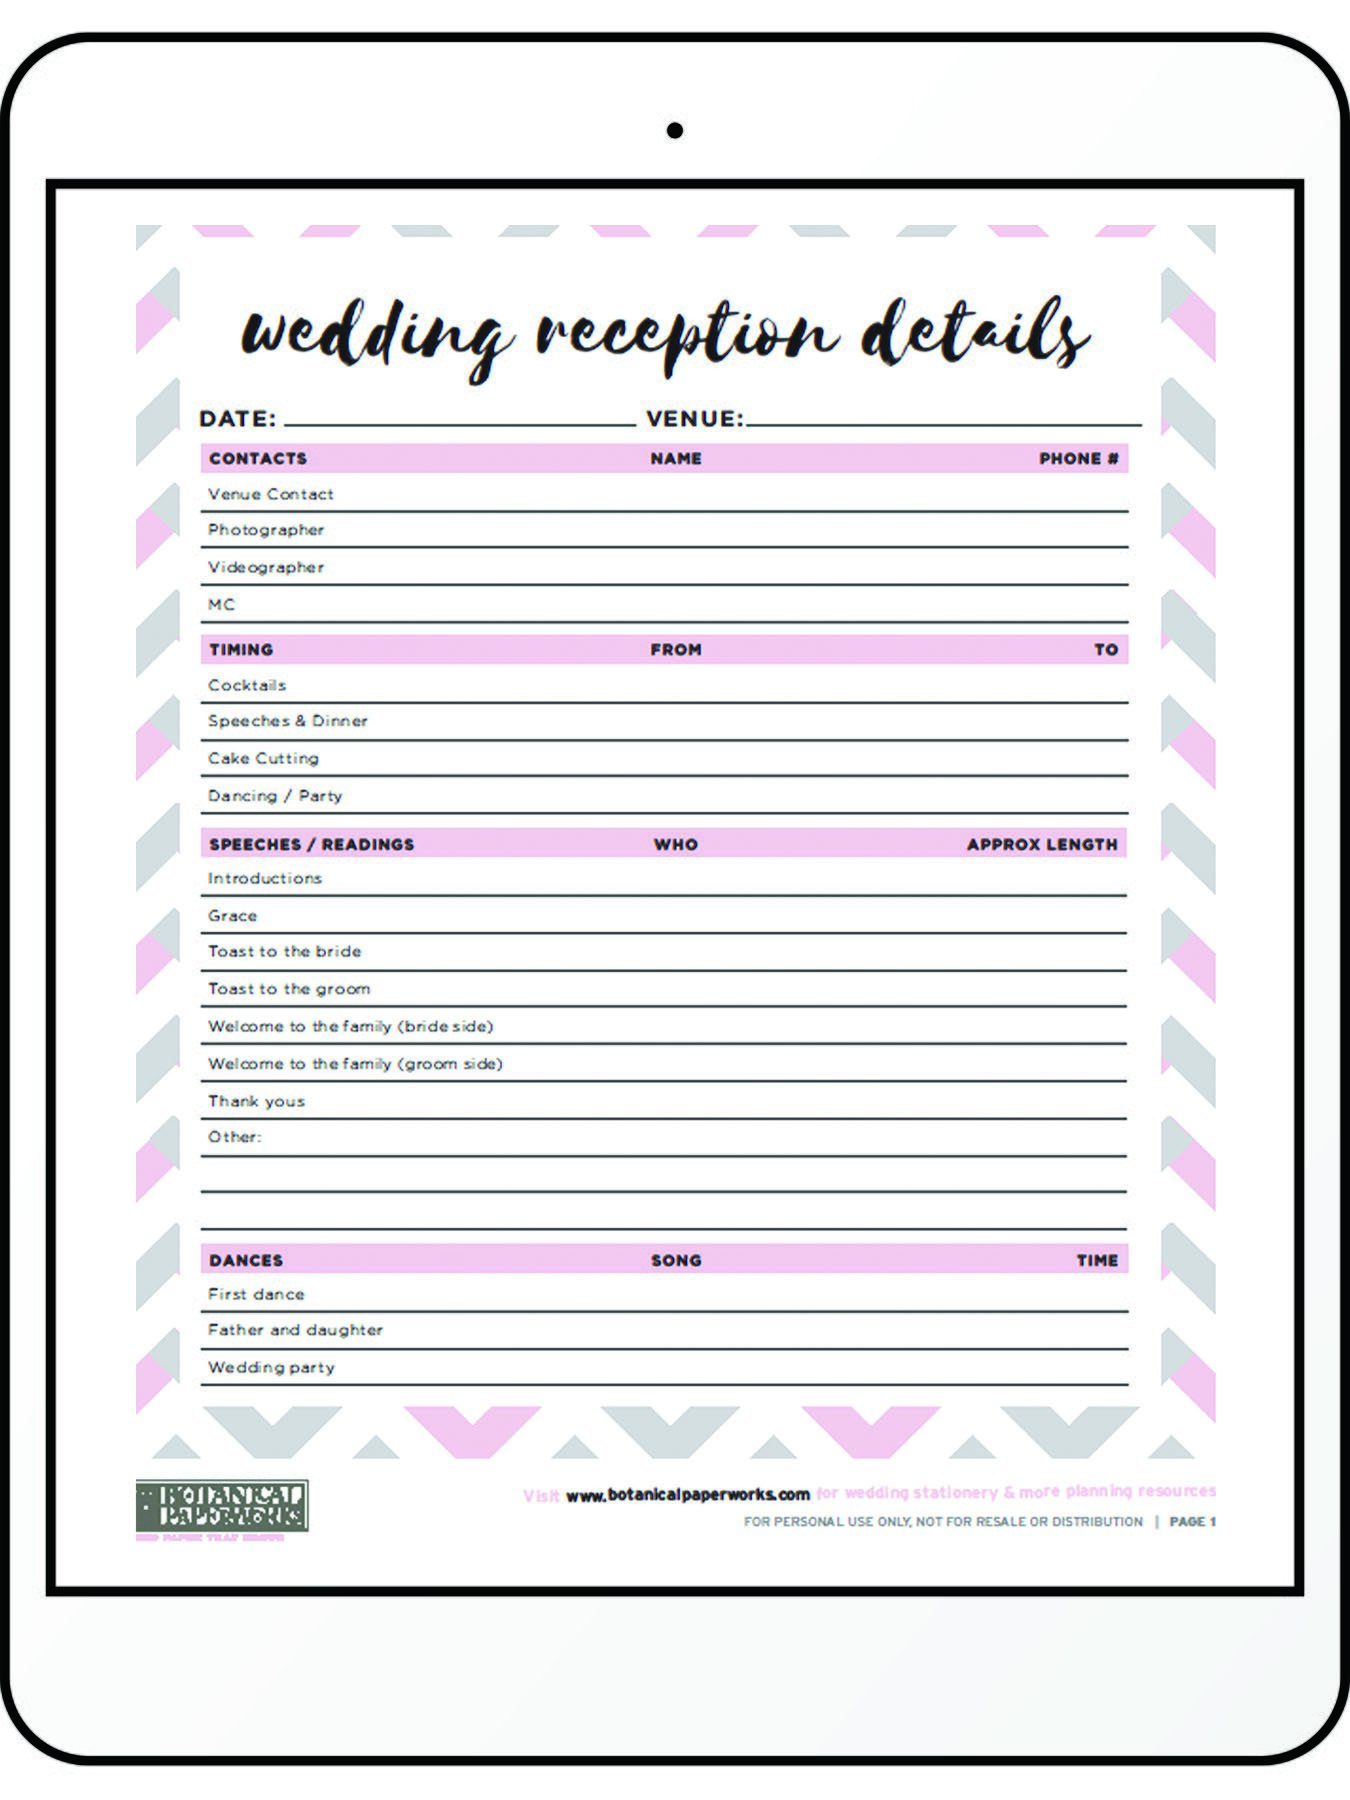 Downloadable Free Printable Wedding Planner Worksheets